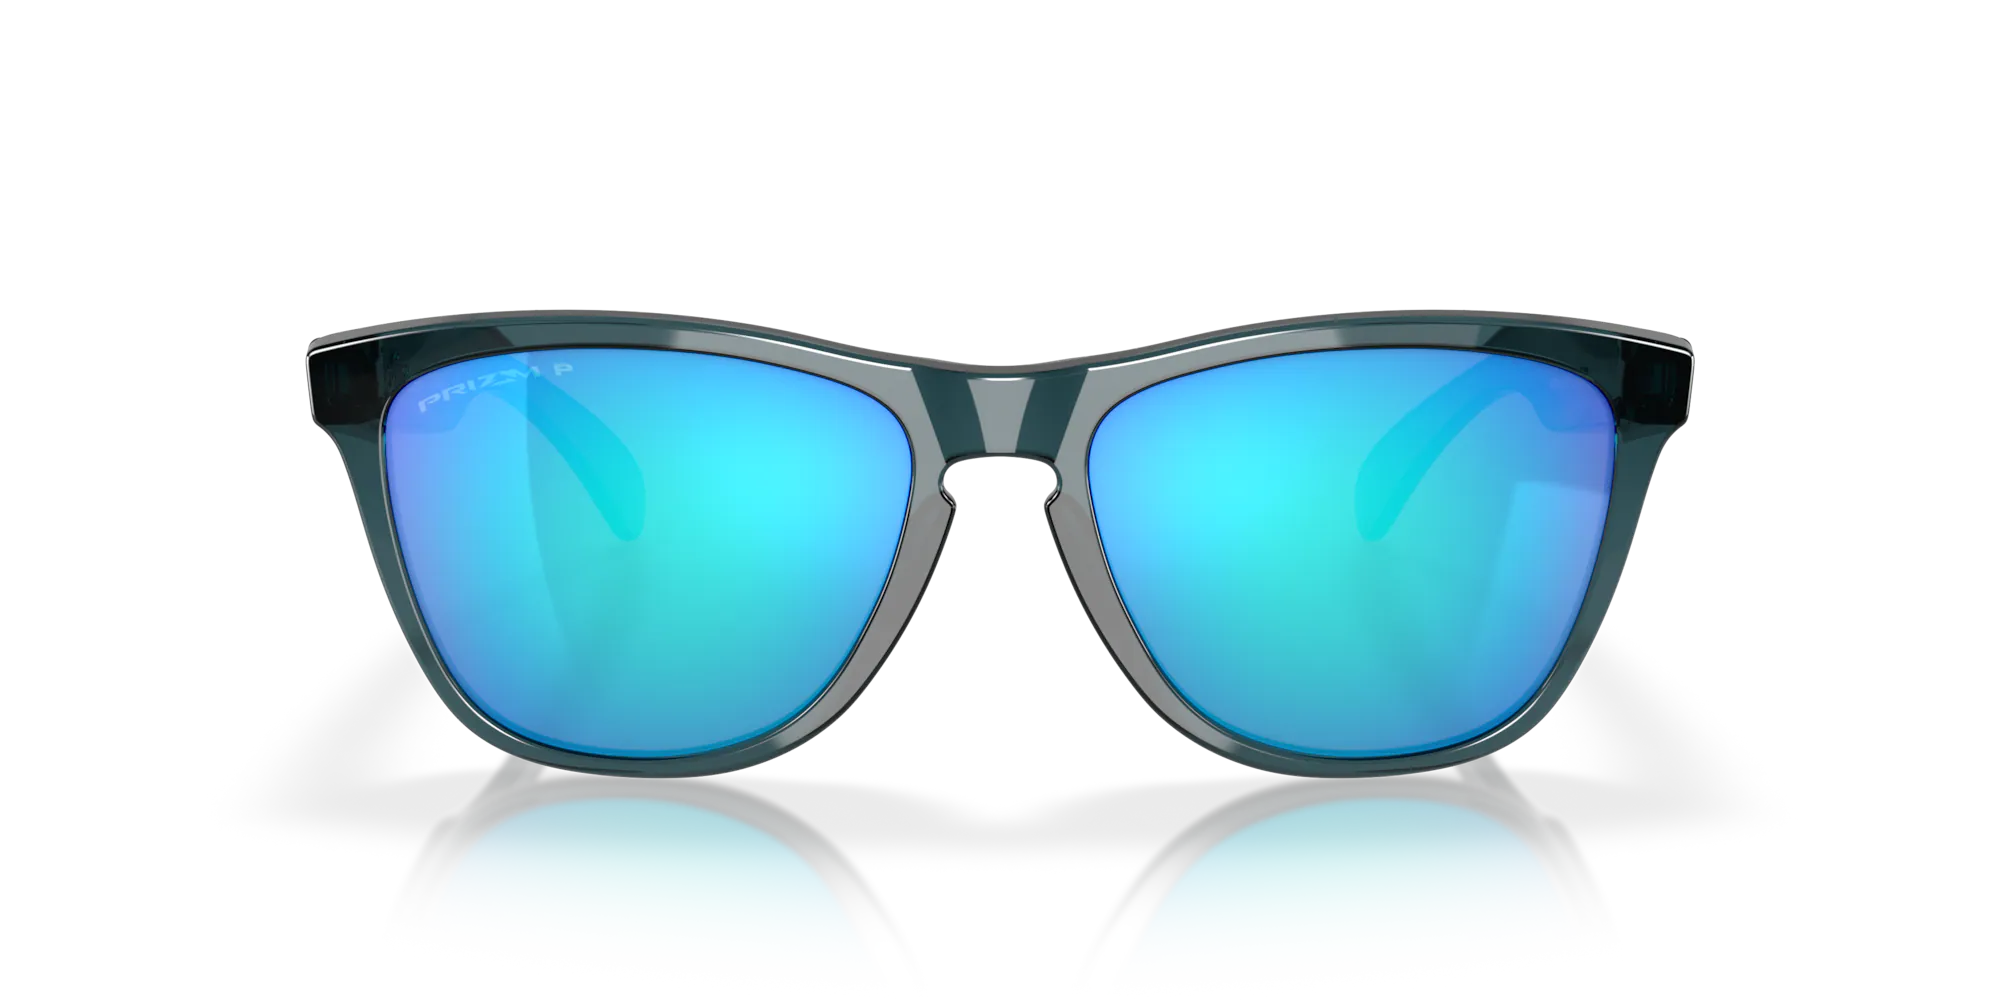 Oakley Turbine Sunglasses Prizm Deep Water Polarized Lens